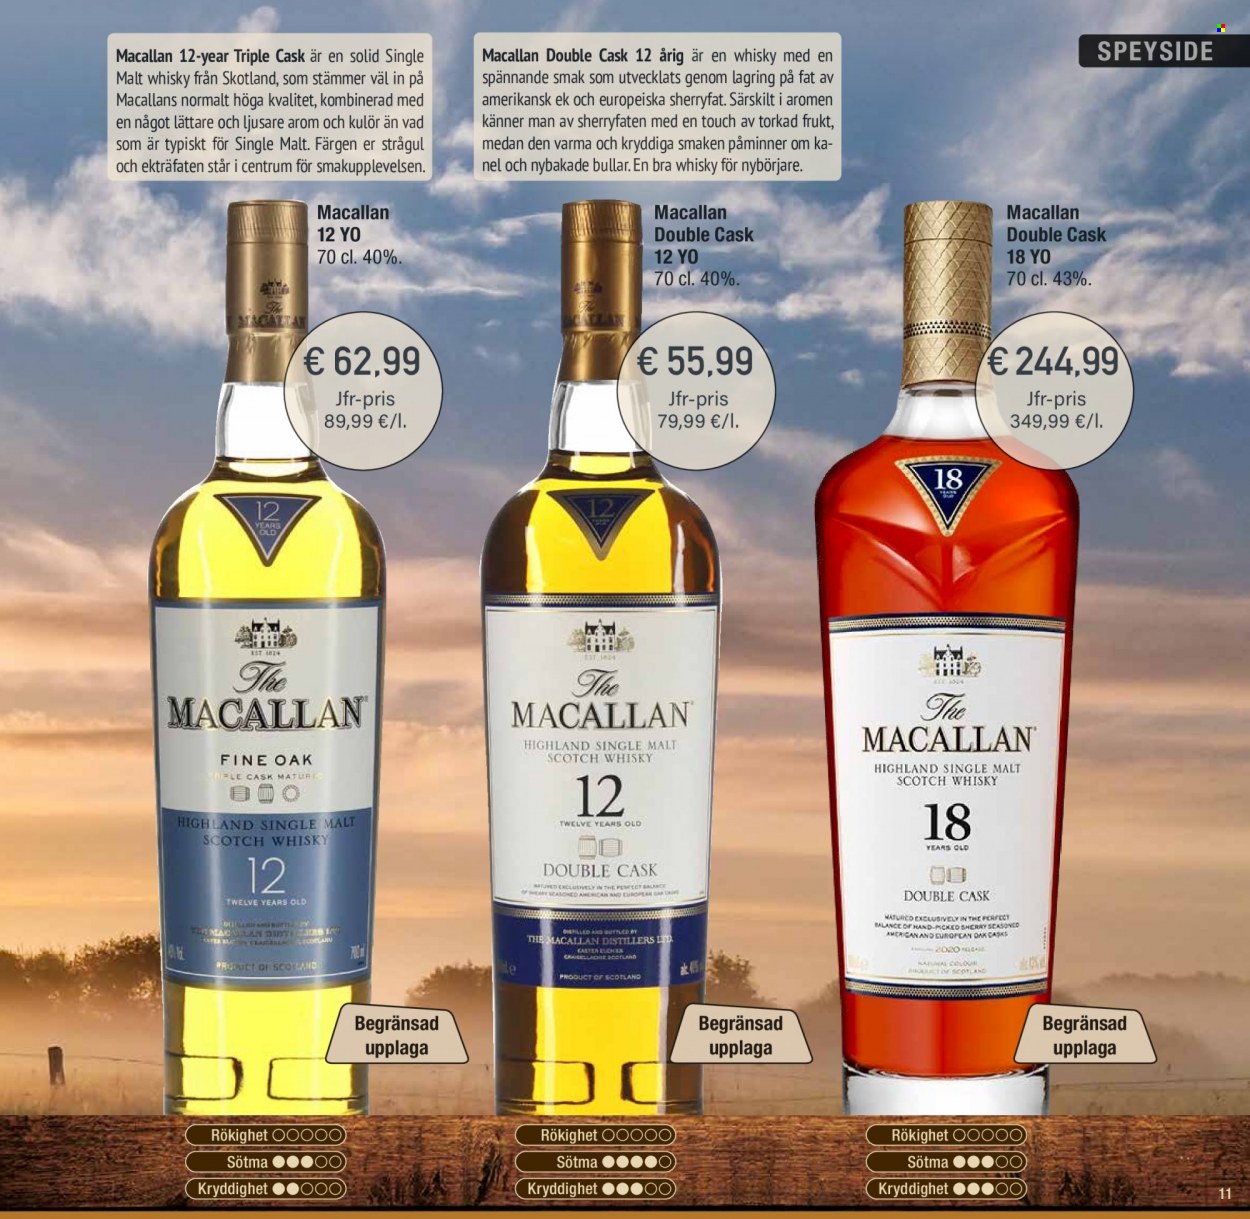 Calle tilbud  - 23.03.2022 - 31.12.2022 - tilbudsprodukter - single malt, whisky. Side 11.